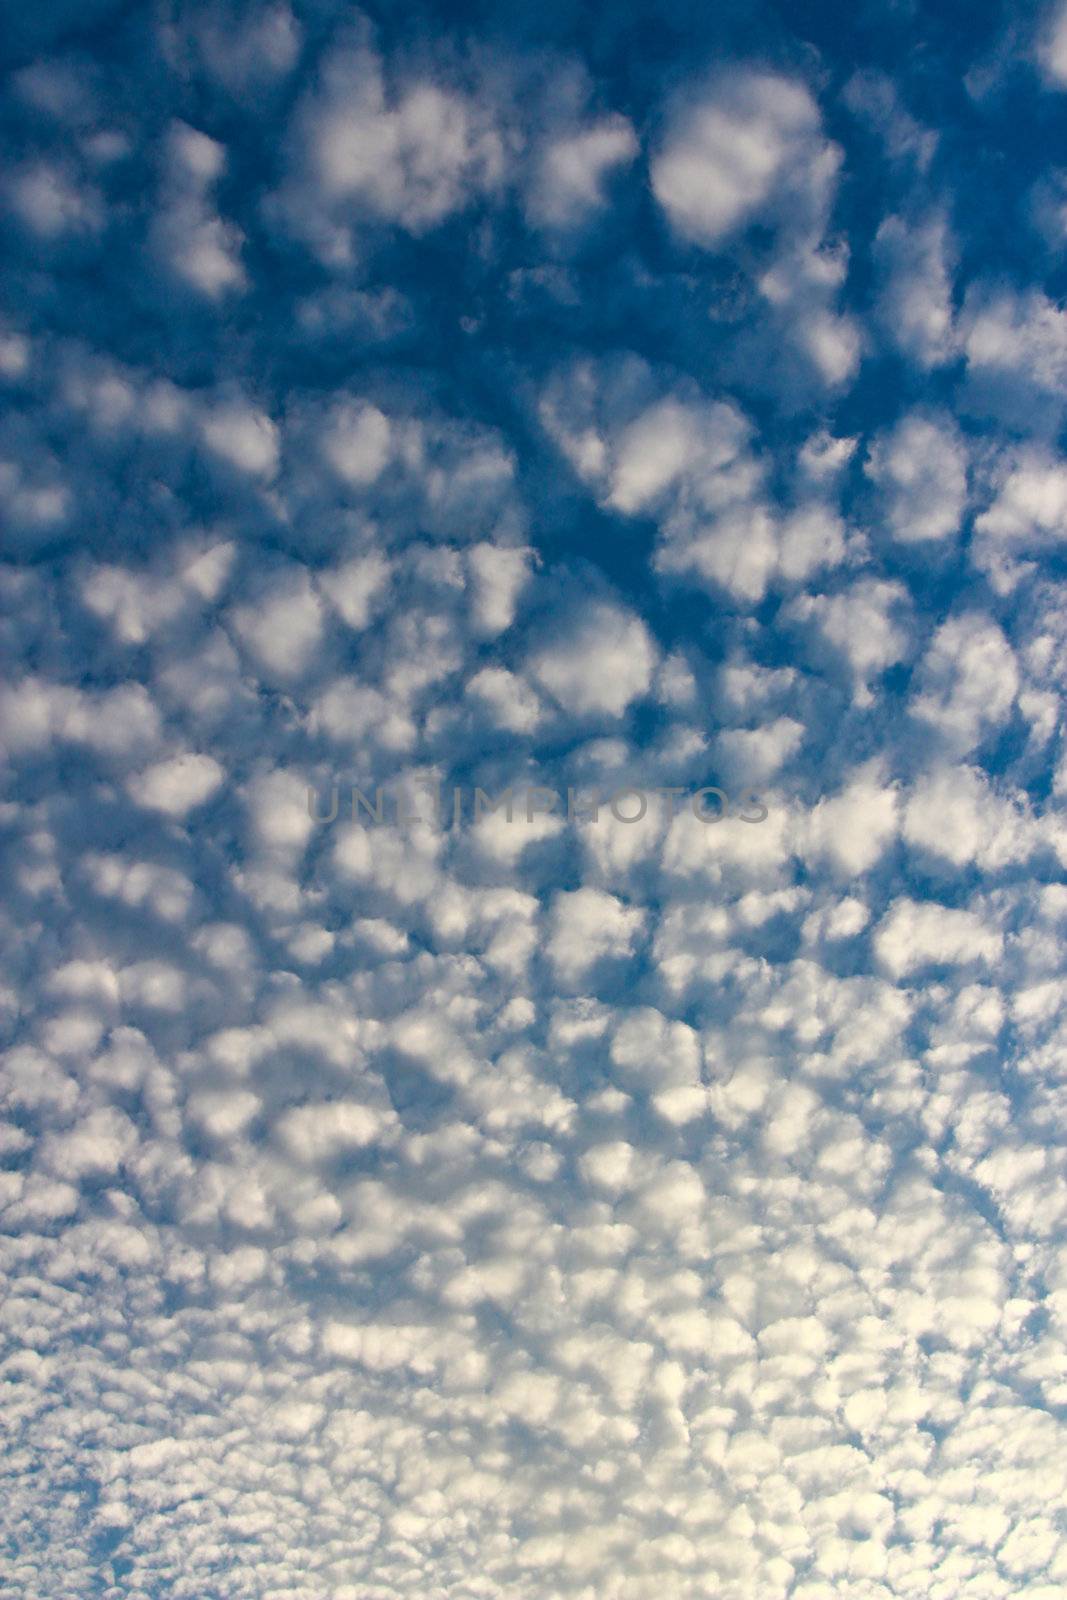 Background of cloud. by bajita111122